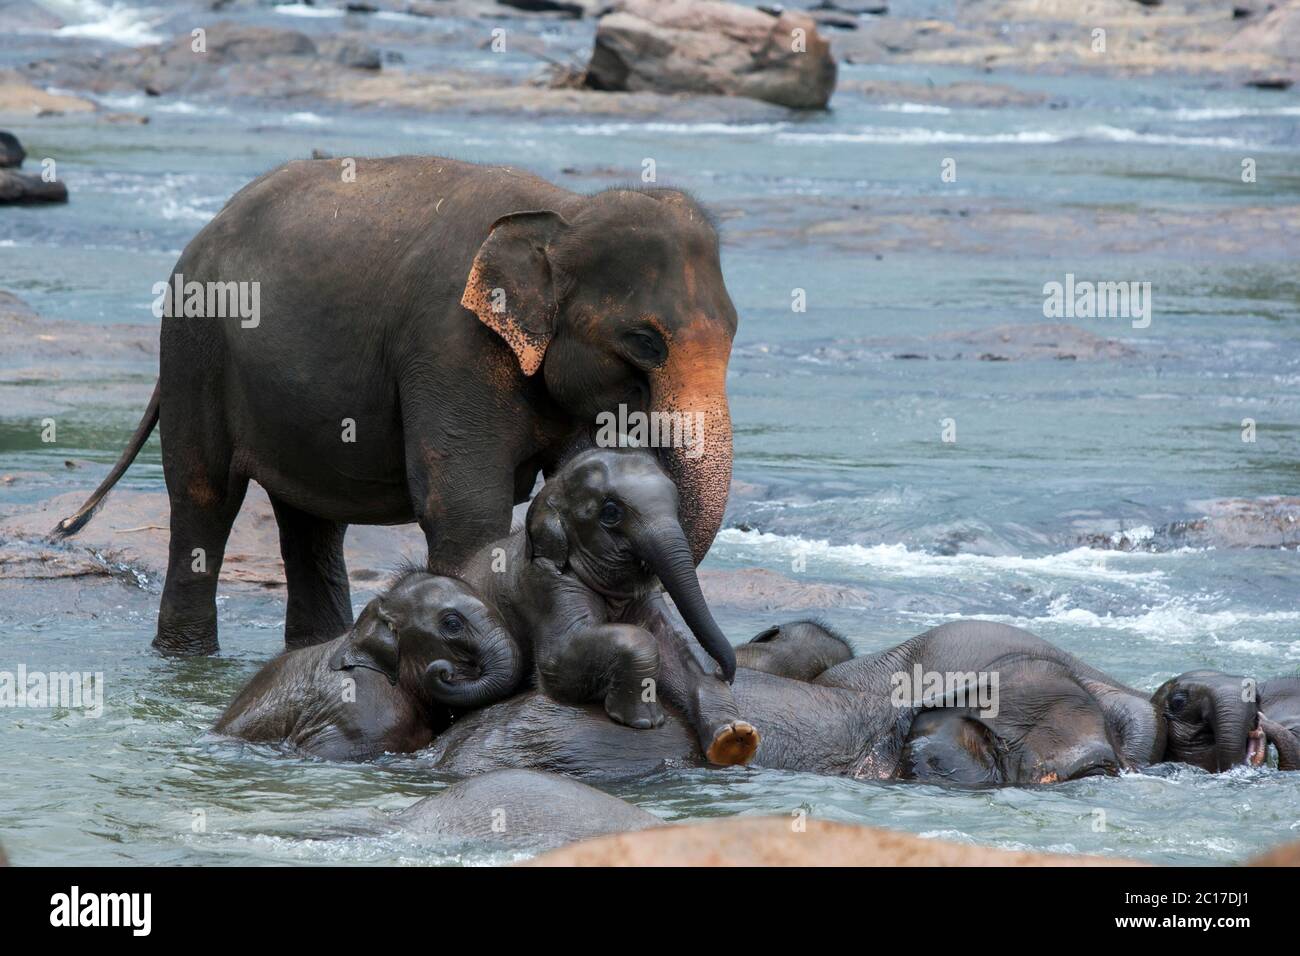 Elephant calves from the Pinnawala Elephant Orphanage climb over an adult elephant whilst bathing in the Maha Oya River in central Sri Lanka. Stock Photo